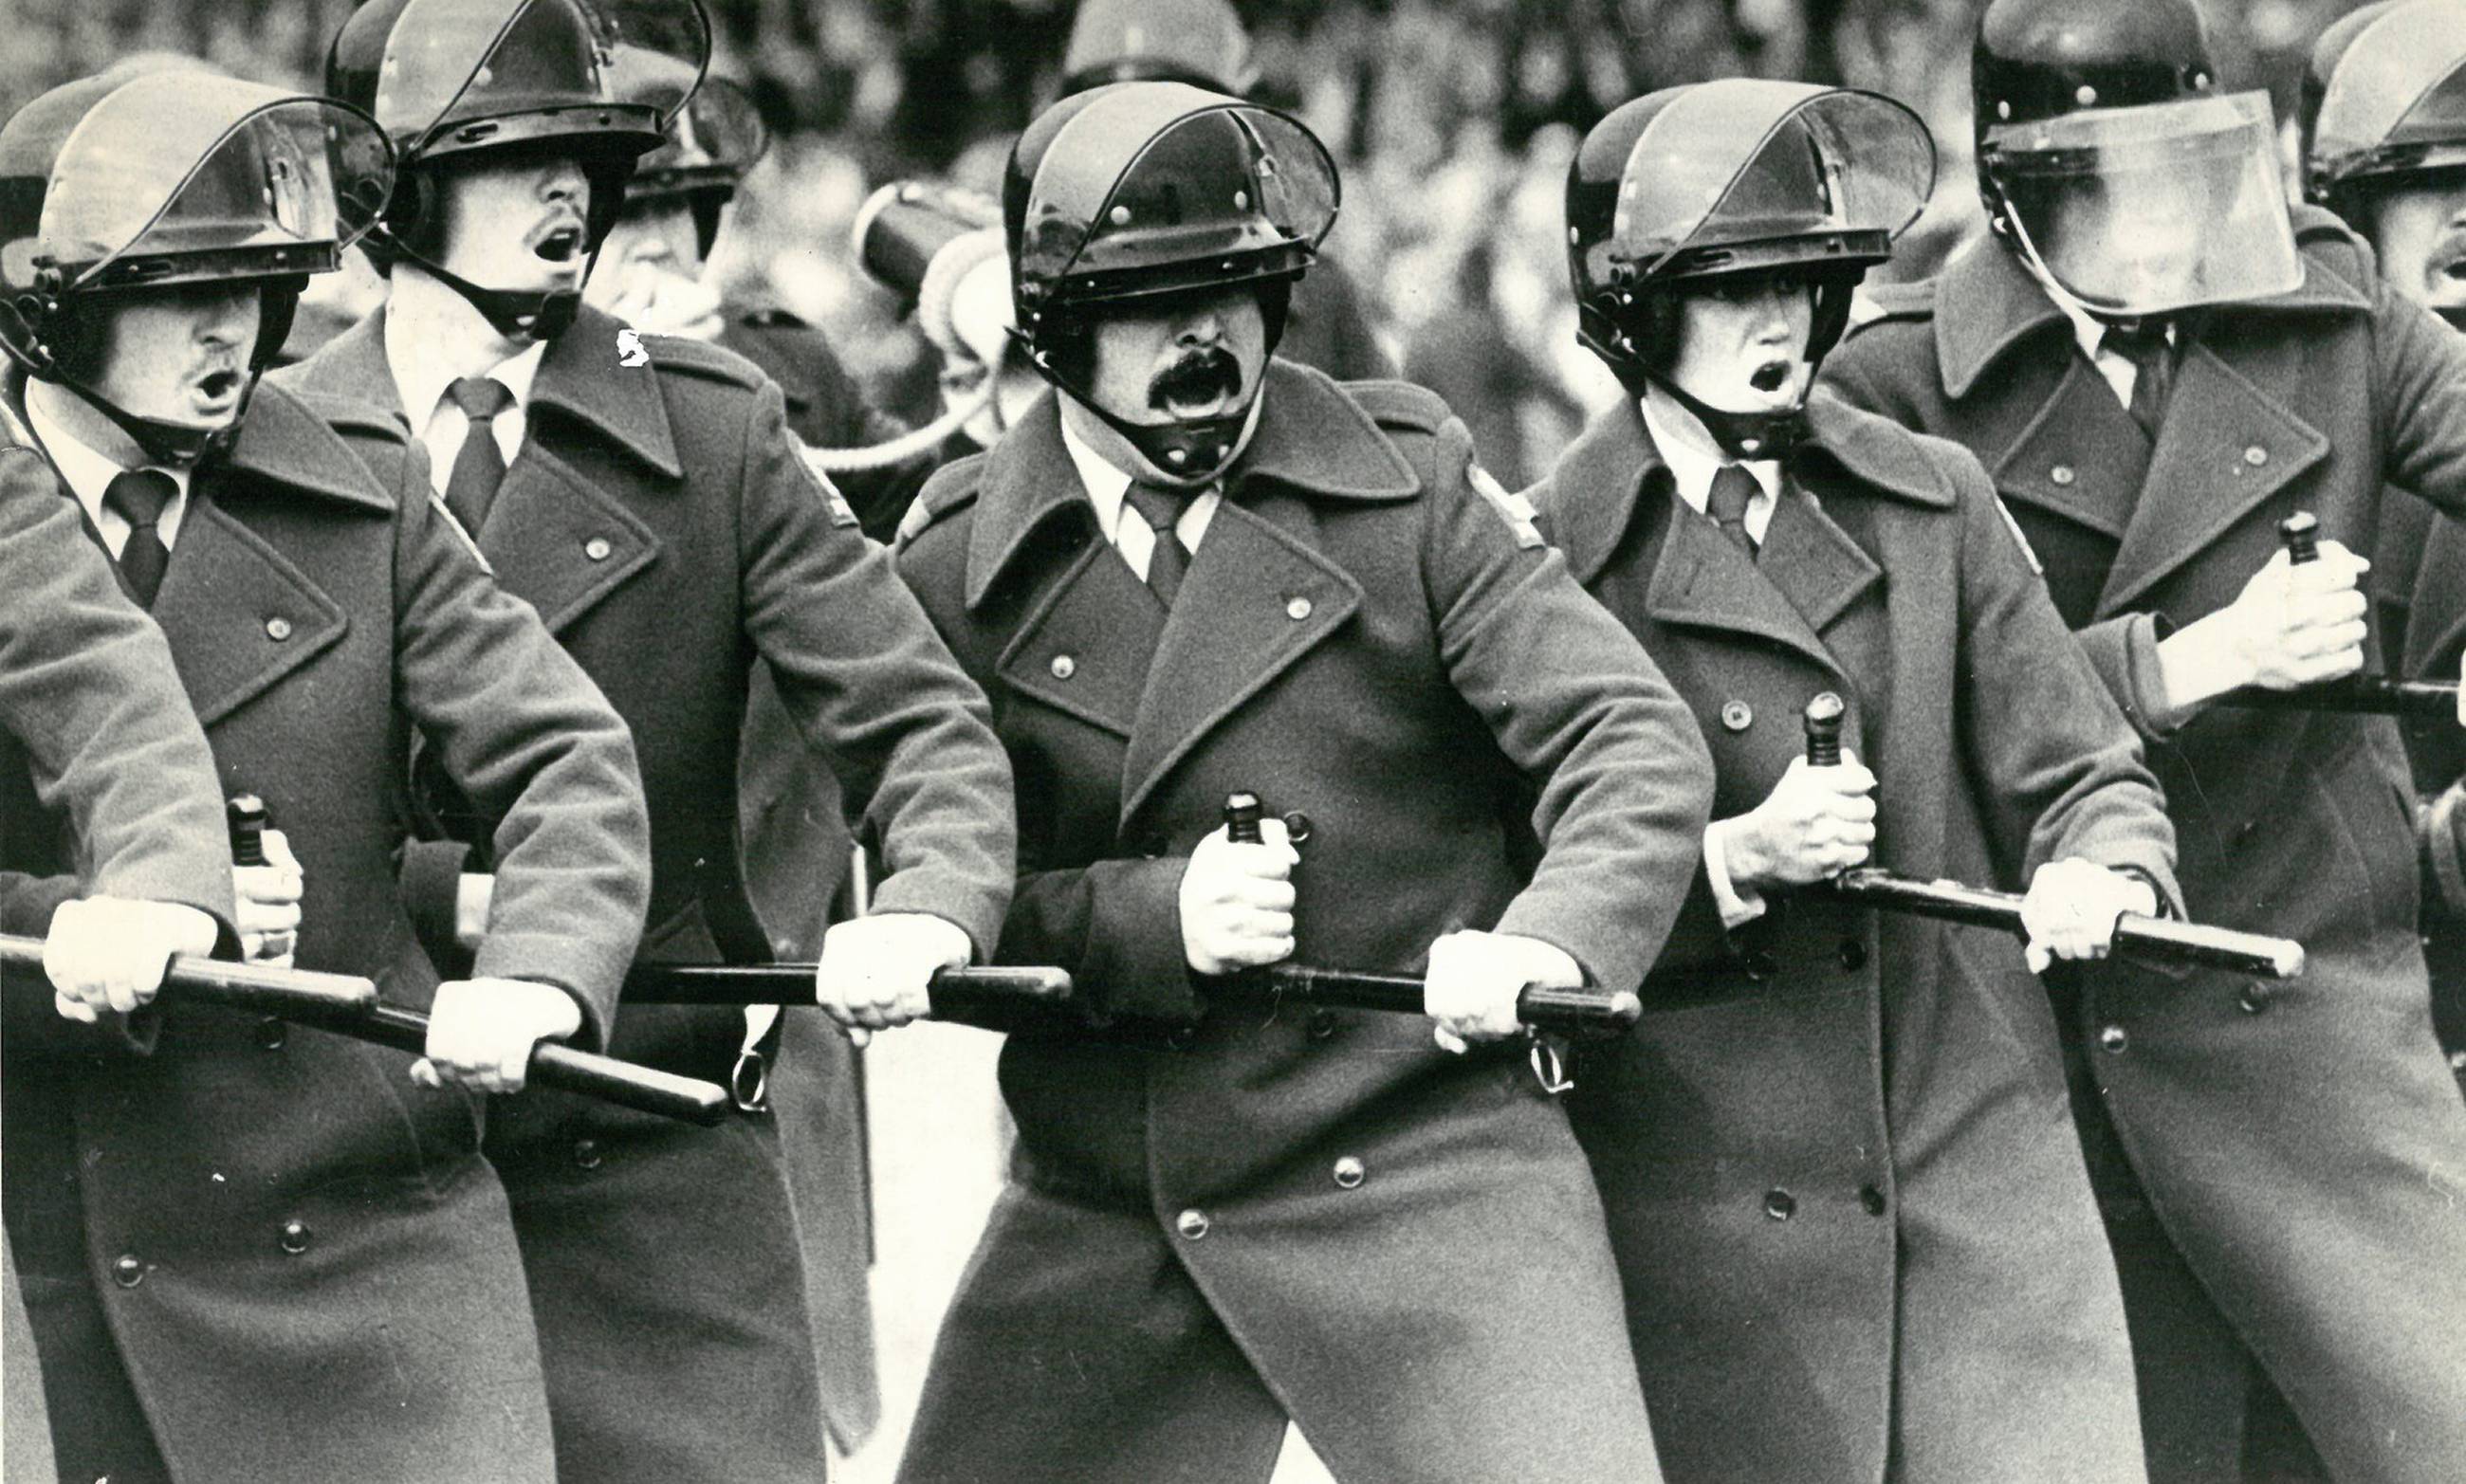 springbok tour 1981 police